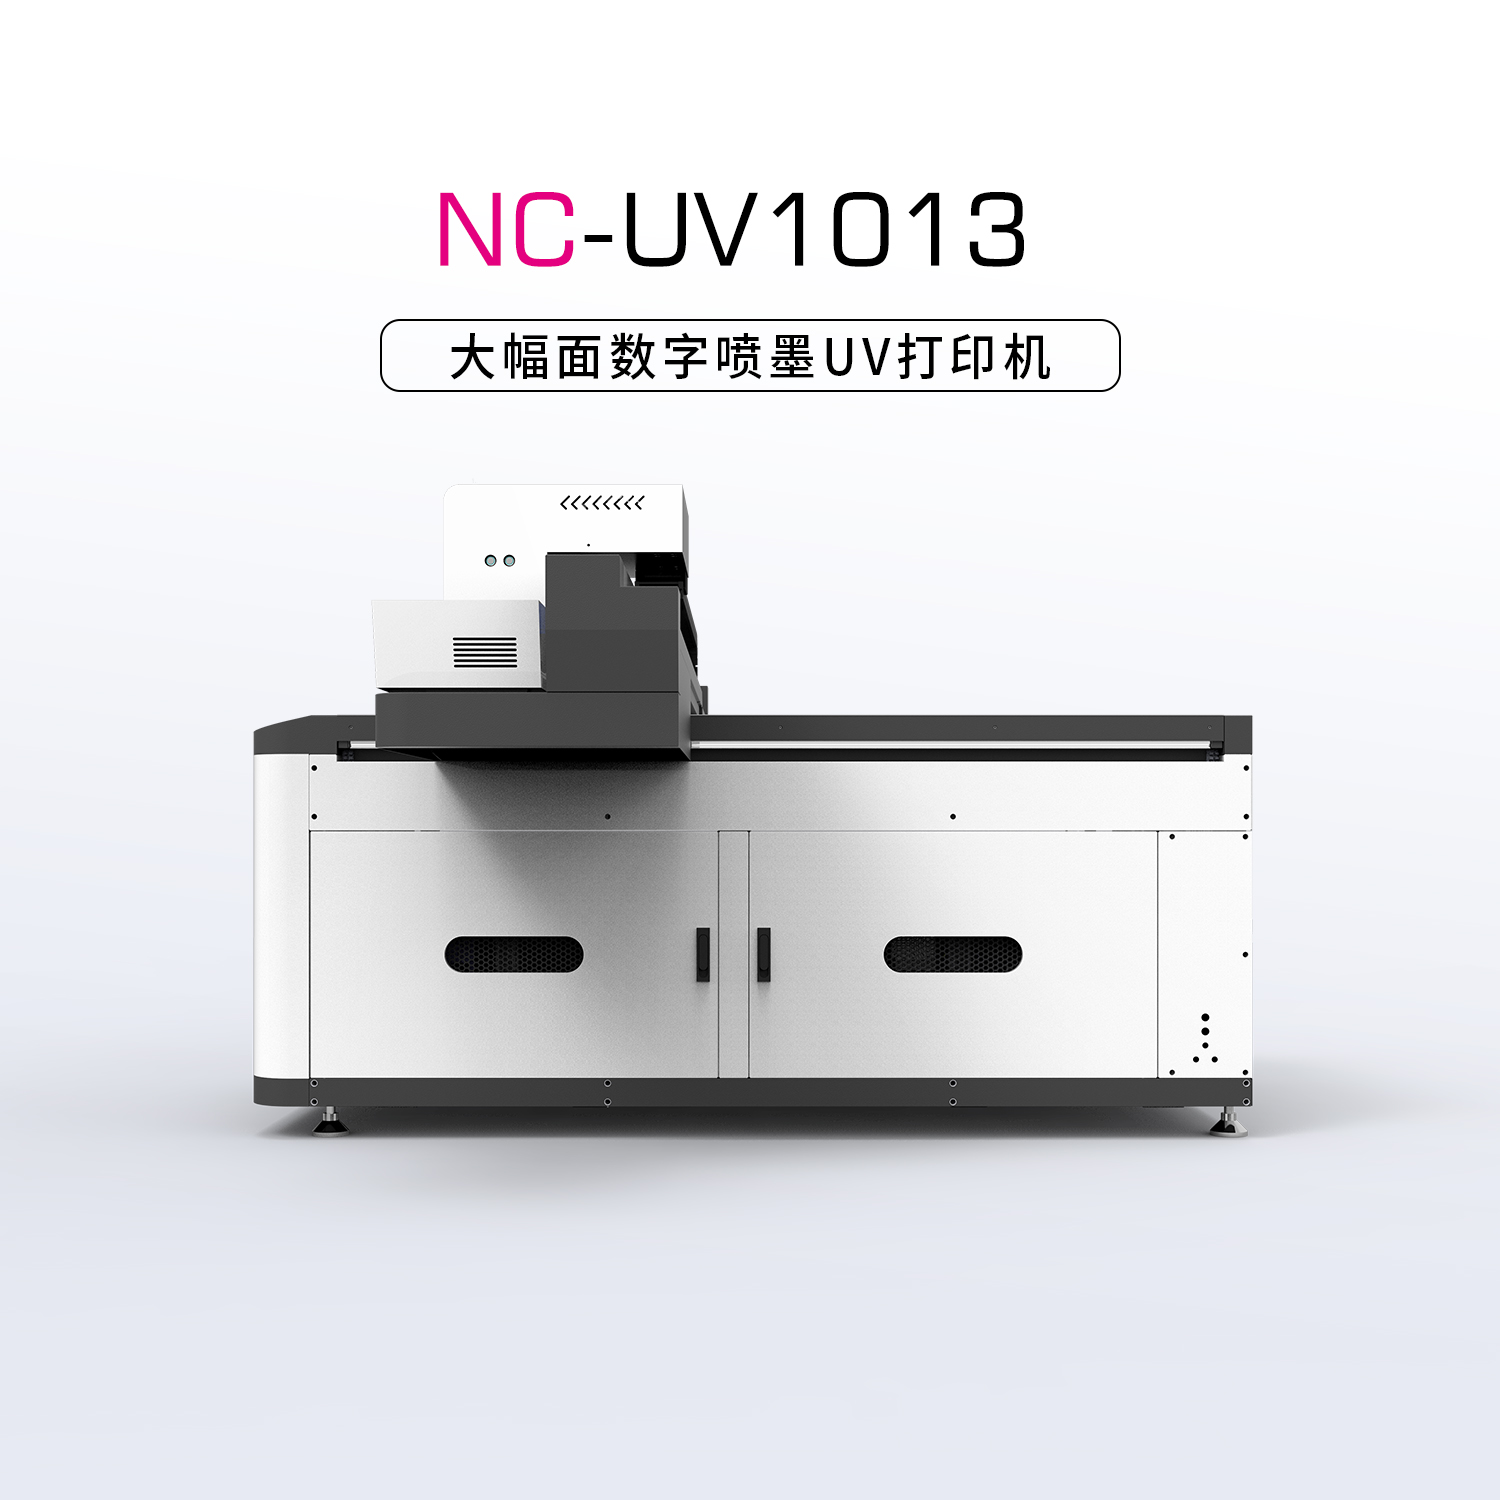 NC-UV1013-中大型UV平板打印机